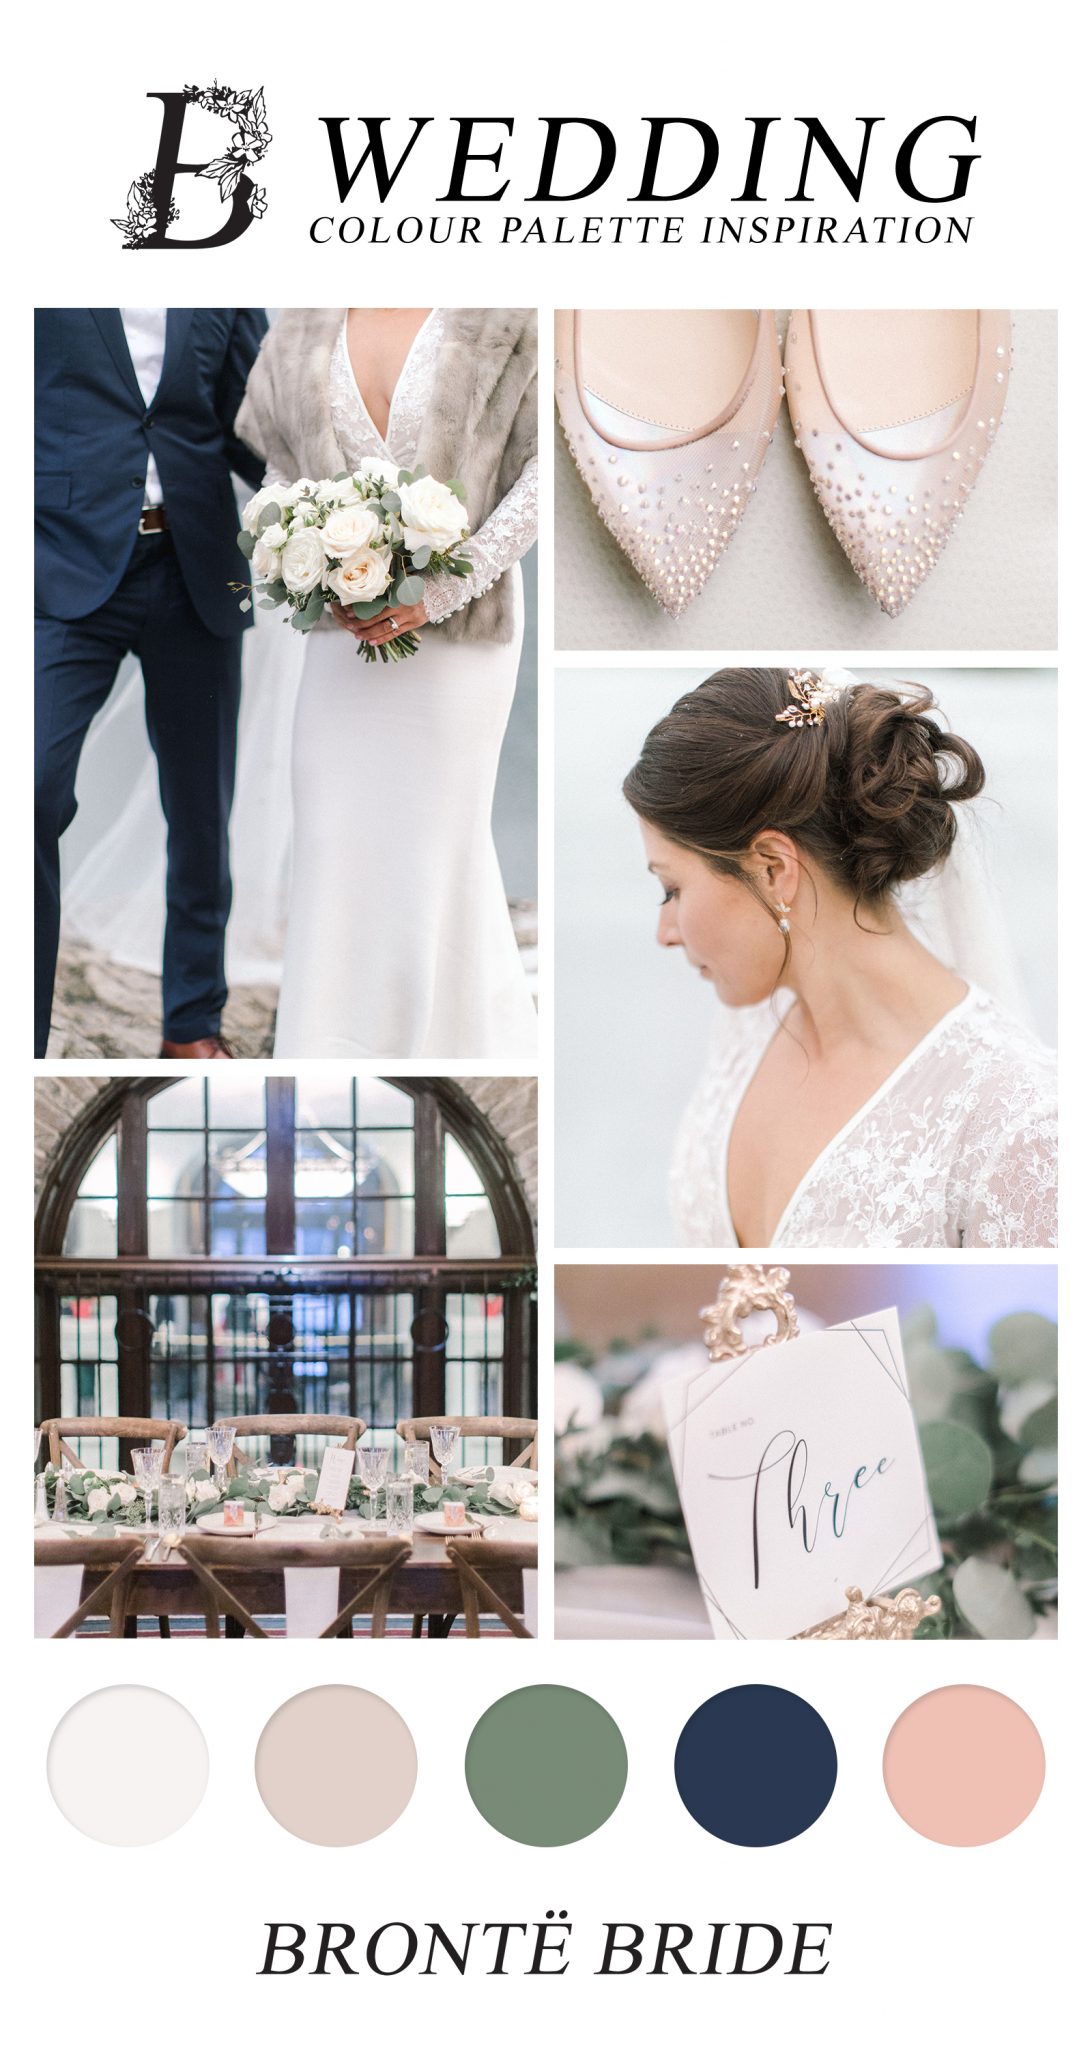 Modern Wedding Colour Palette Inspiration - Classic Elegance at Banff Springs Hotel - blush, navy, and green wedding